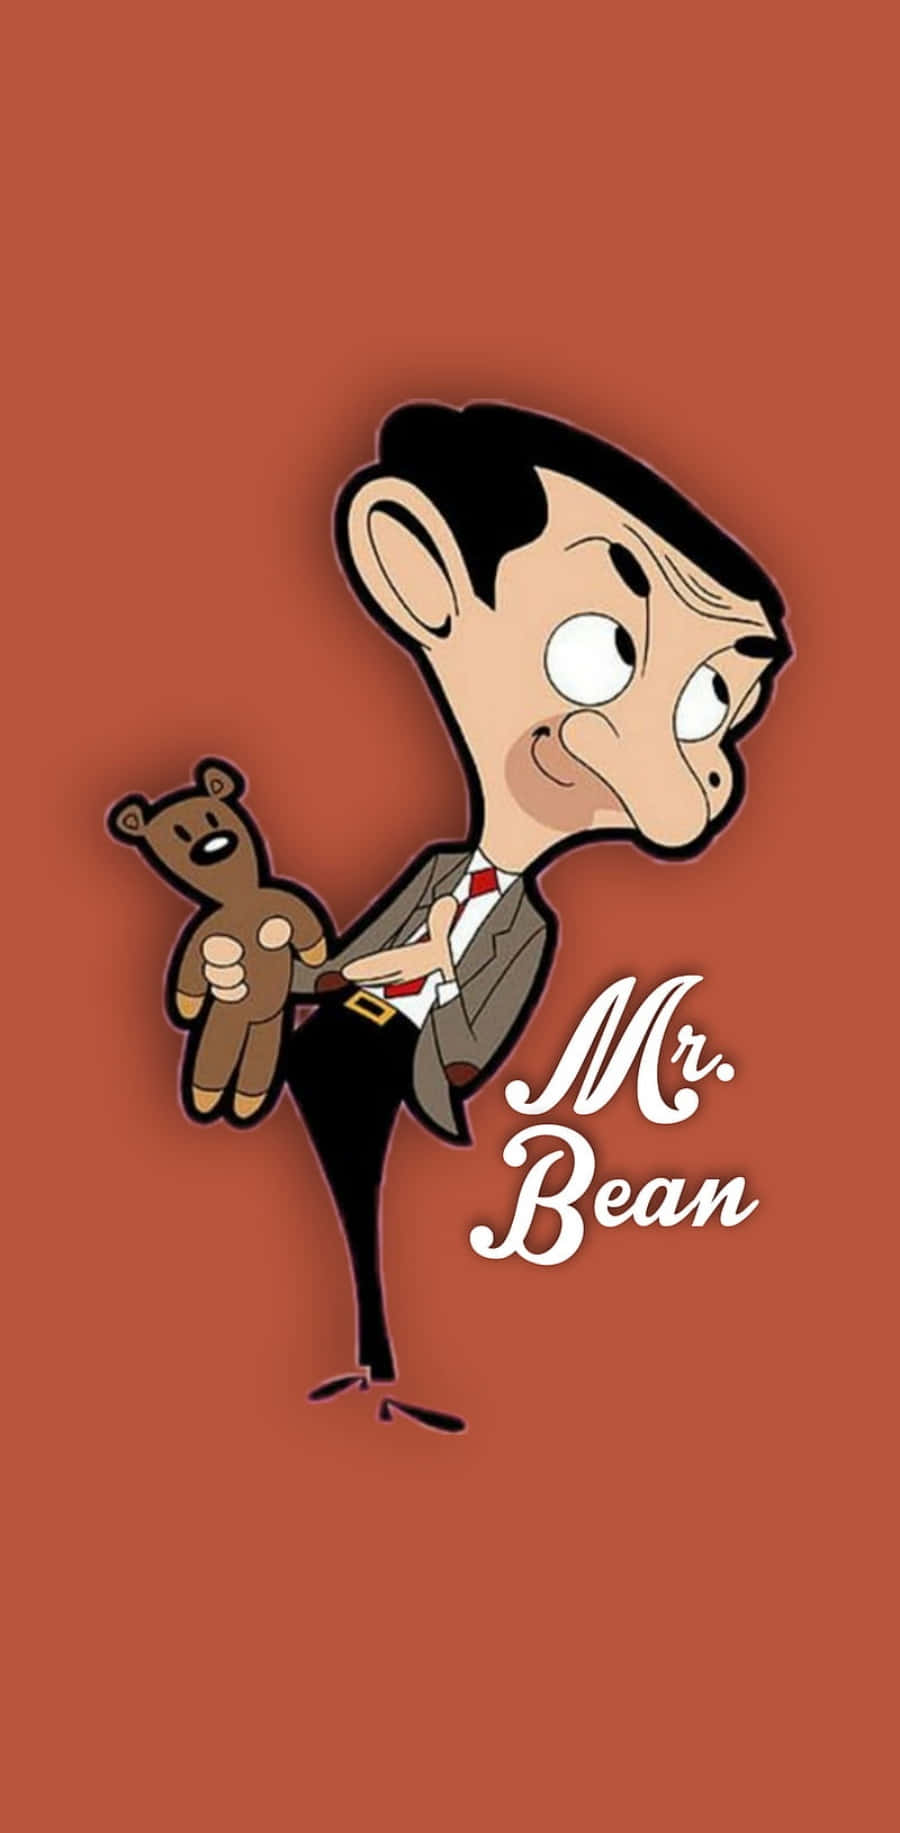 L'espressionecomica Di Mr Bean.